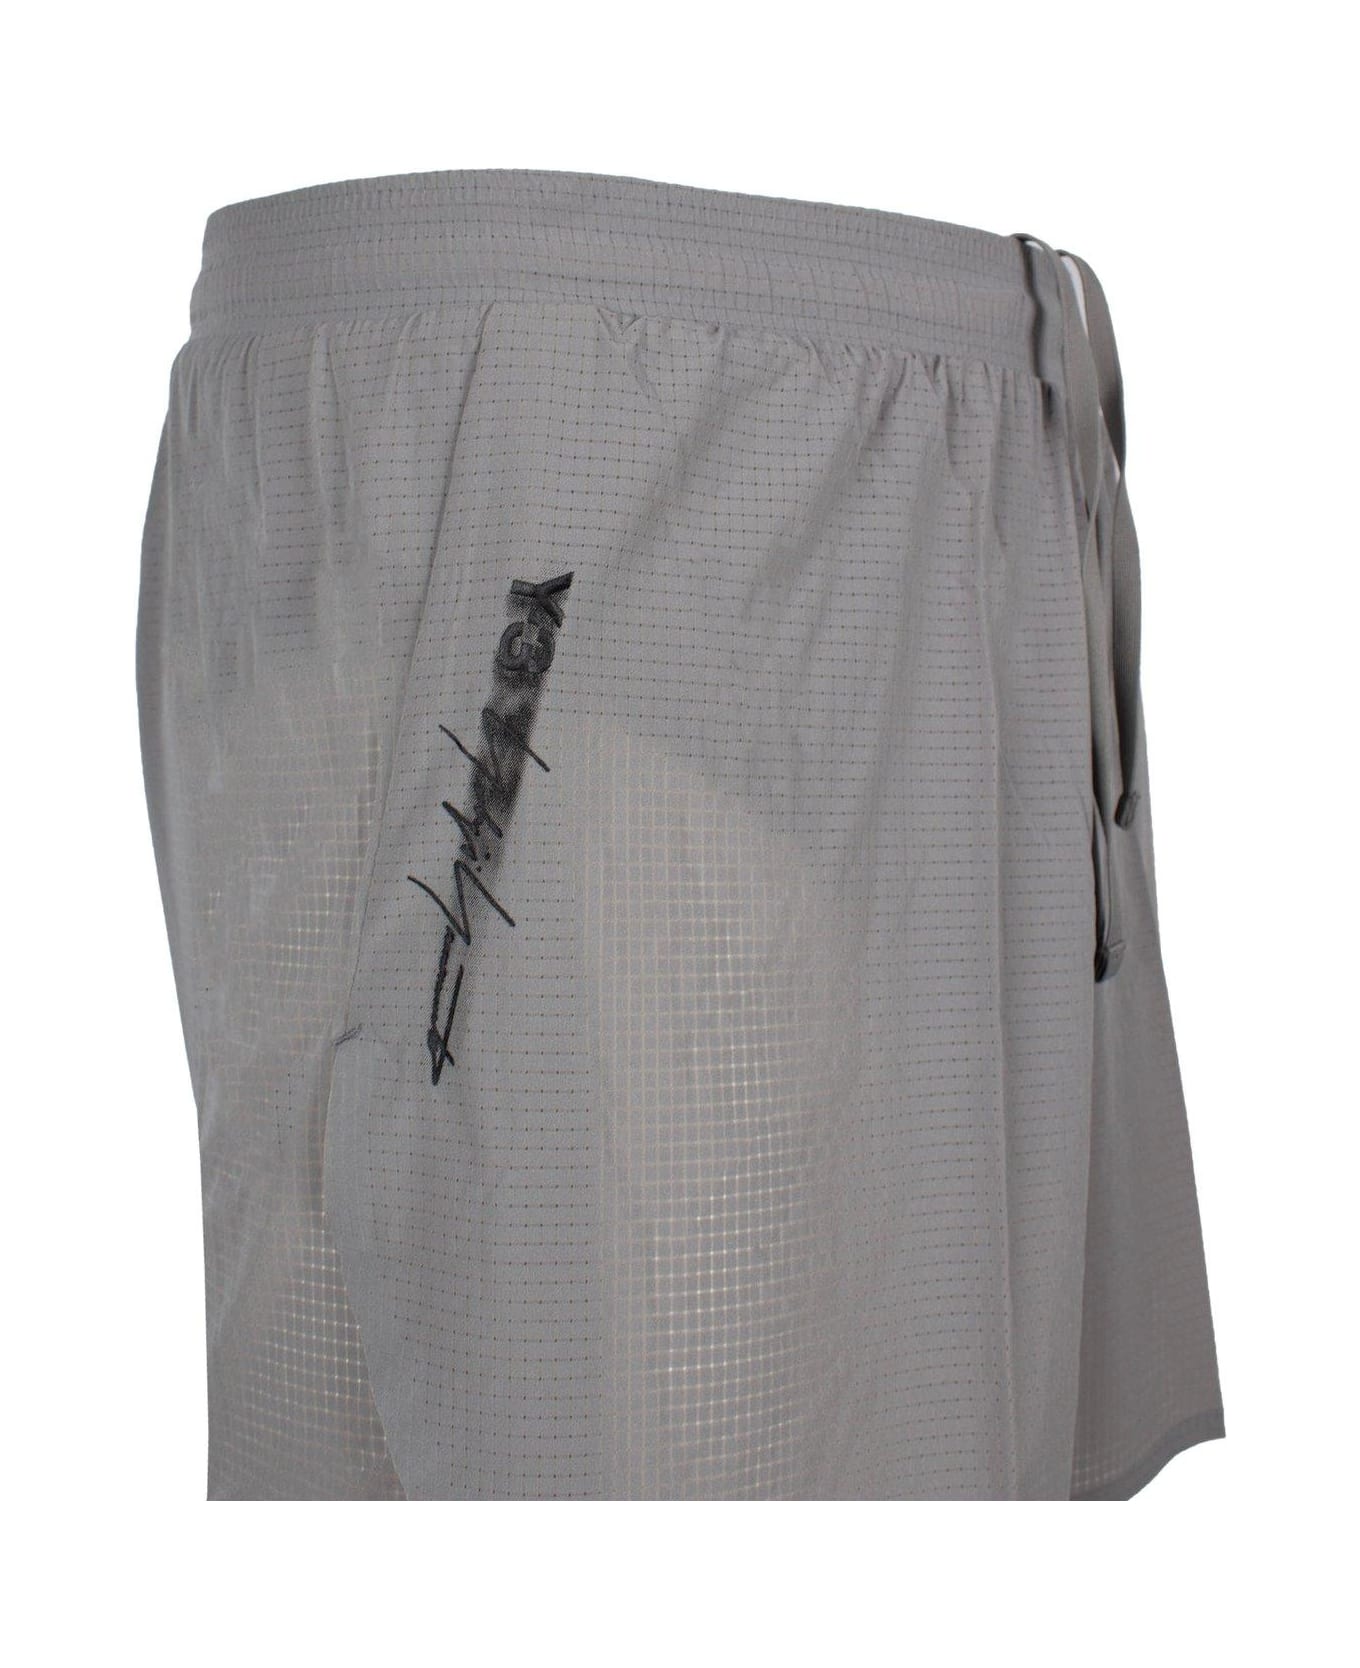 Y-3 Elastic Waist Runner Shorts - Solid Grey